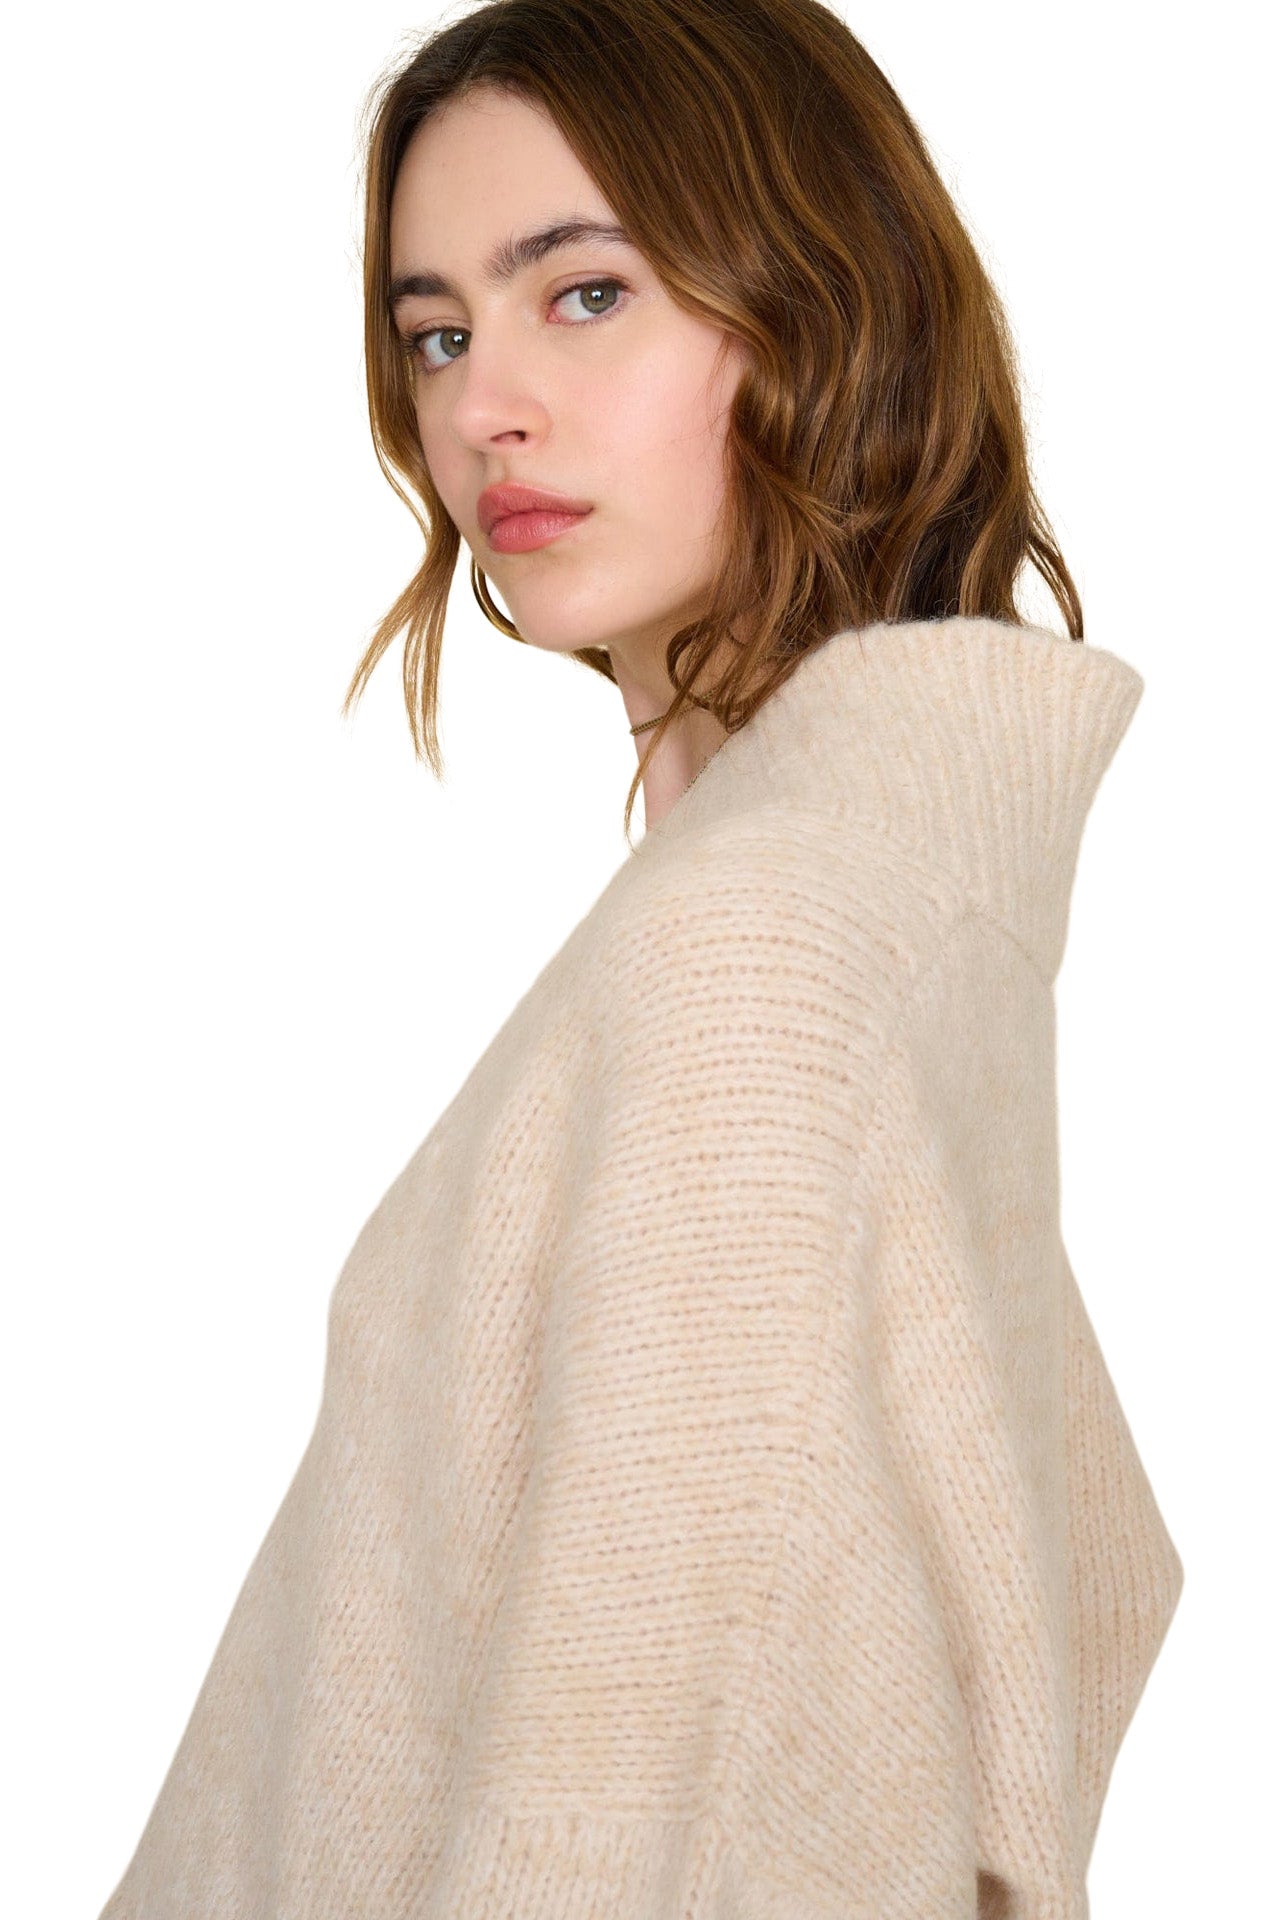 Xirena Keyes Sweater in Dune Marble